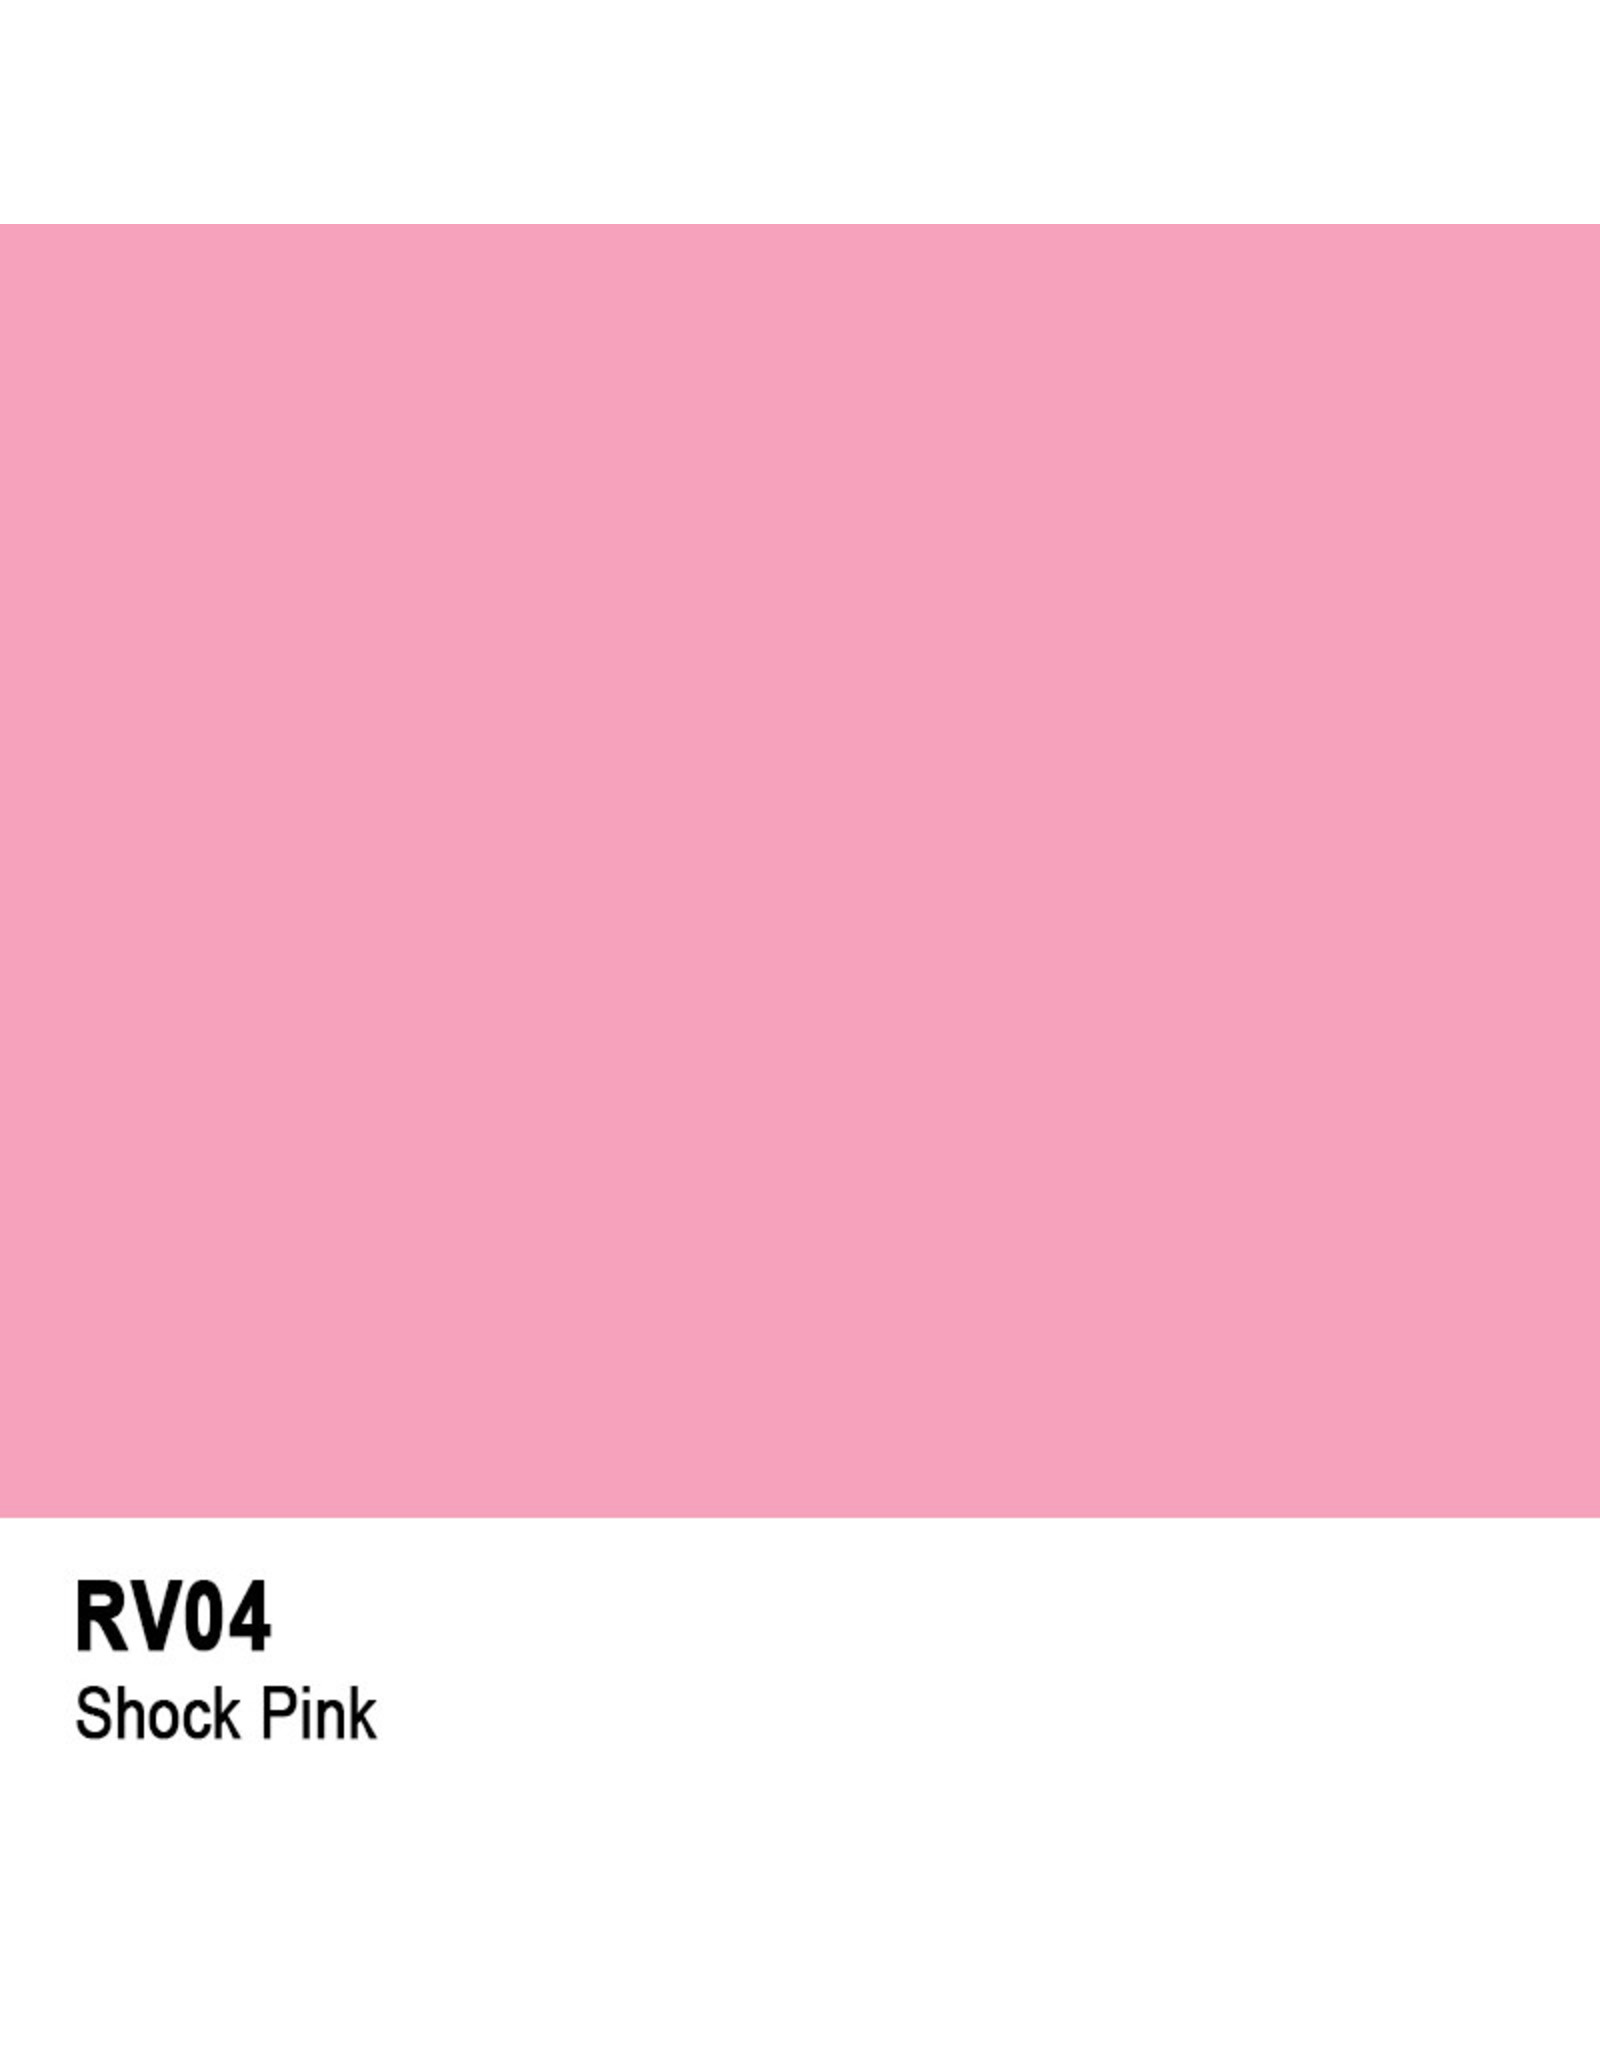 COPIC COPIC RV04 SHOCK PINK SKETCH MARKER